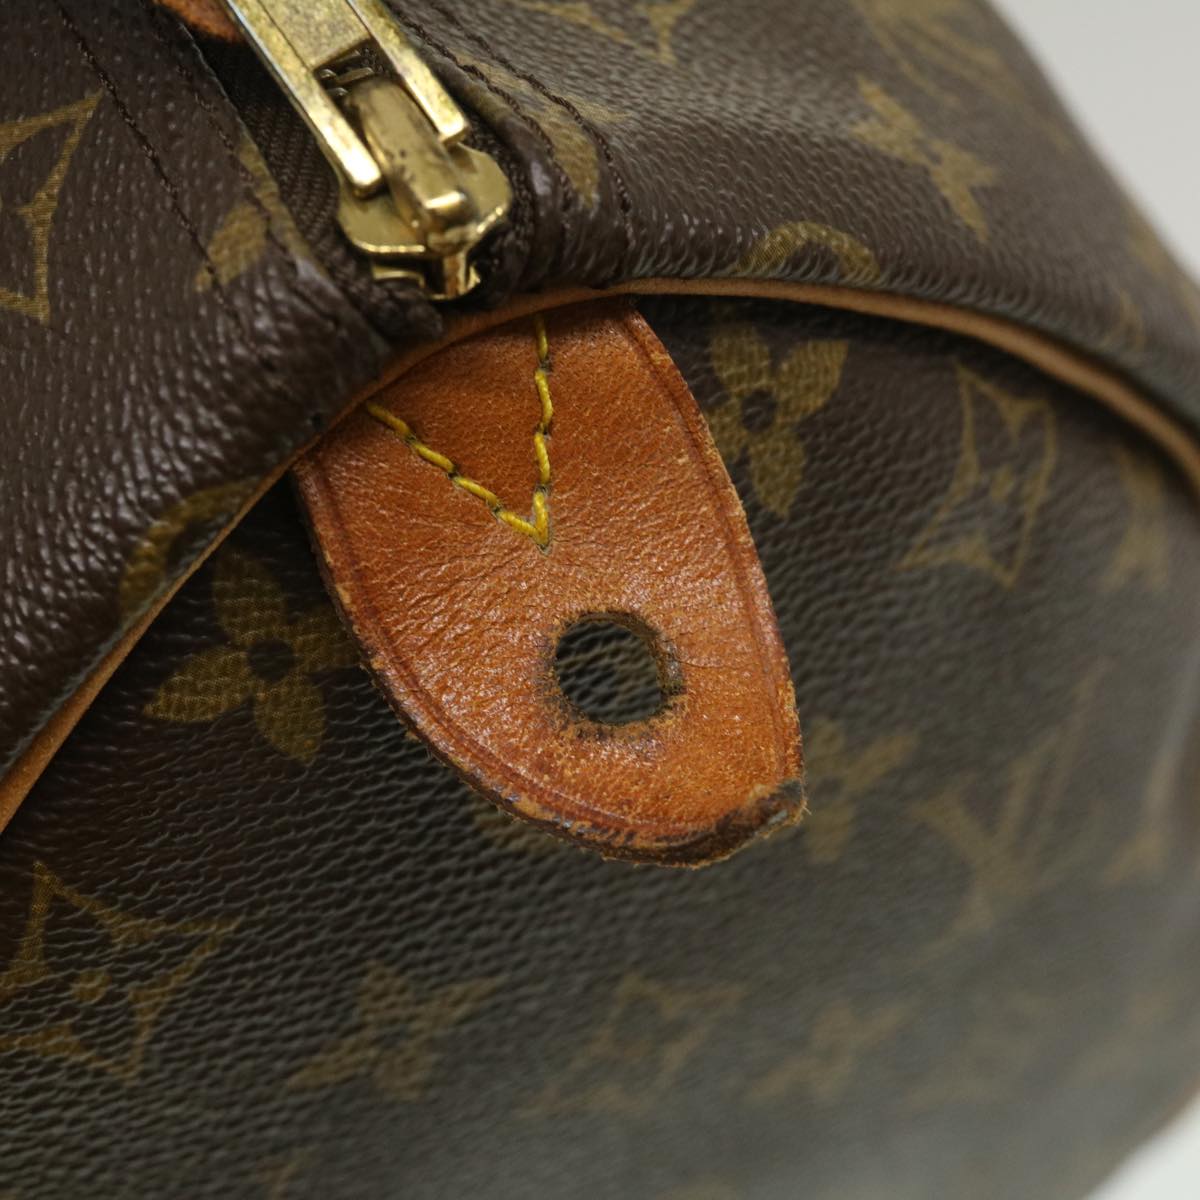 Louis Vuitton Monogram Speedy 30 Leather Fabric Brown Handbag 796